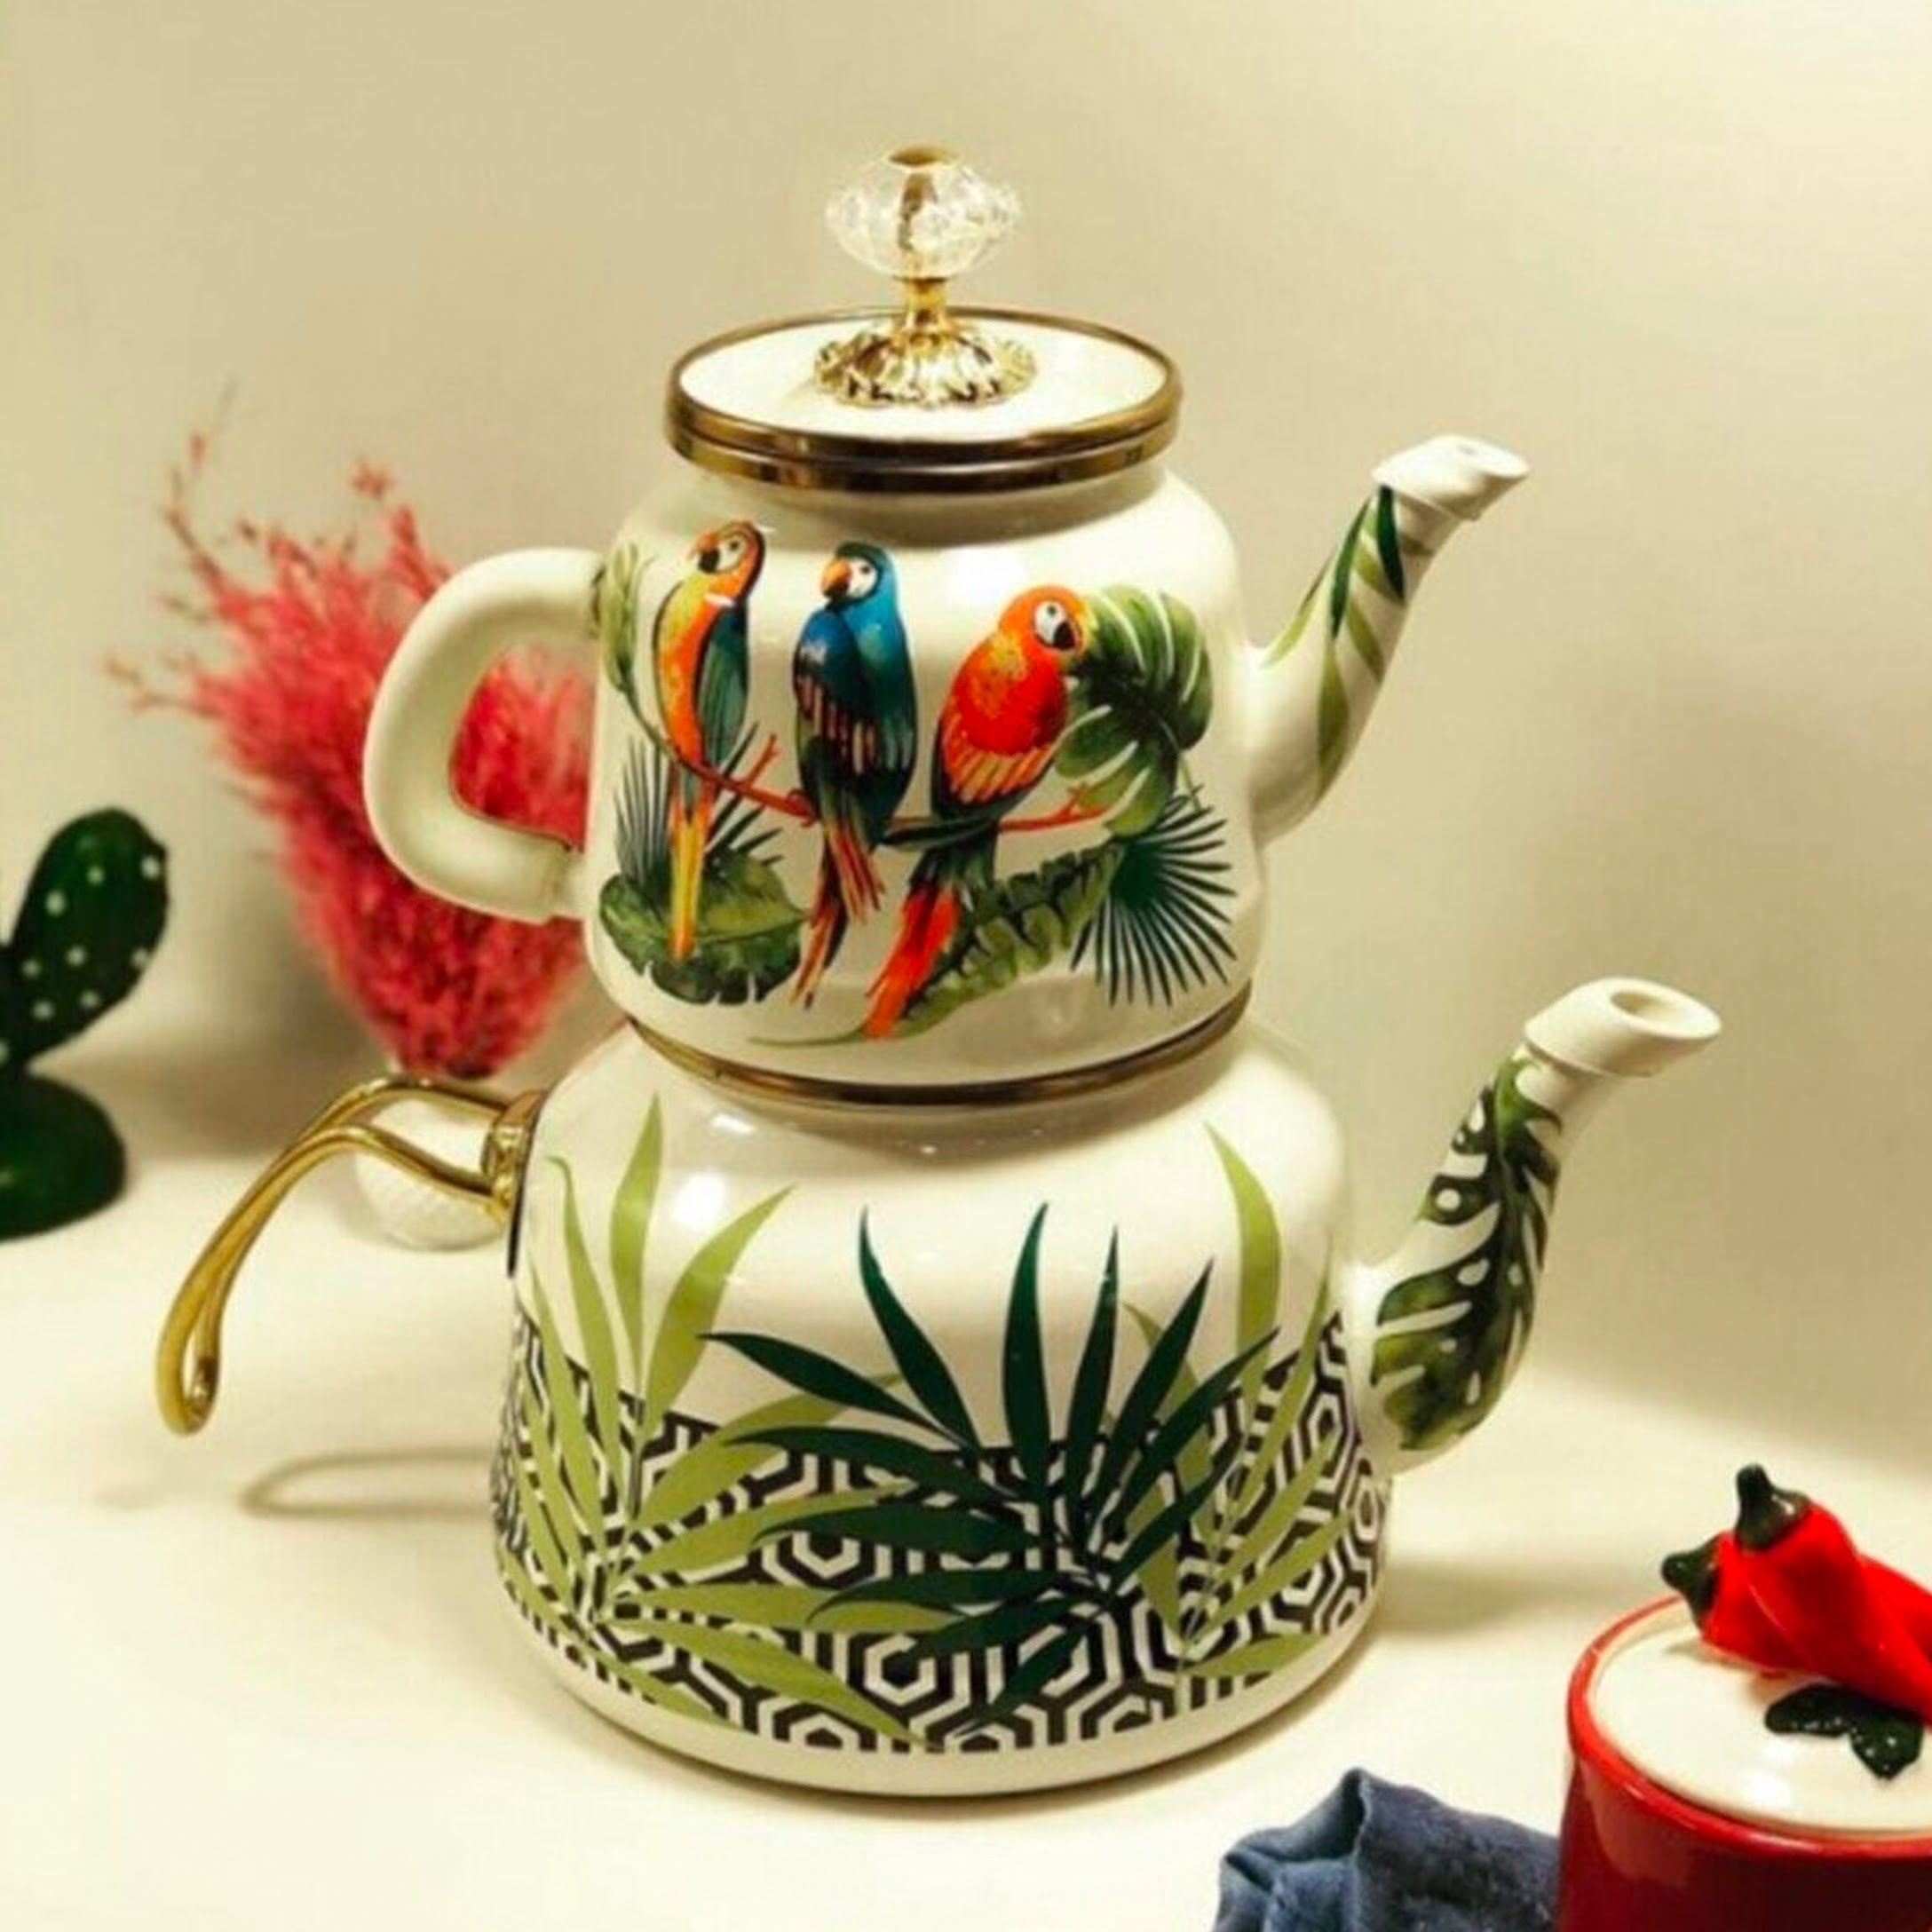 https://traditionalturk.com/wp-content/uploads/2021/08/vintage-parrot-pattern-enamel-turkish-tea-pot-kettle-3.jpg